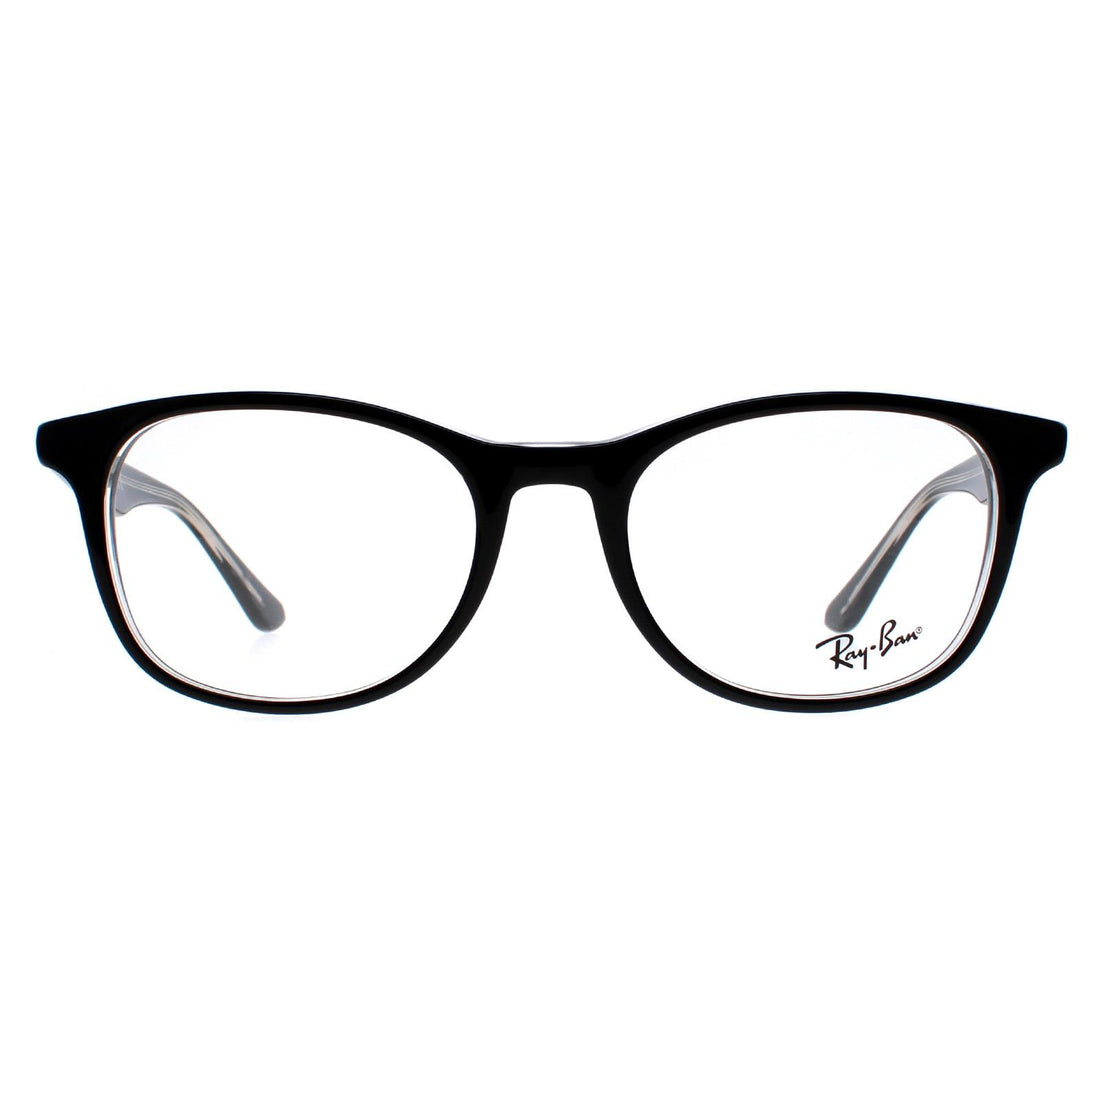 Ray-Ban 5356 Glasses Frames Top Black On Transparent